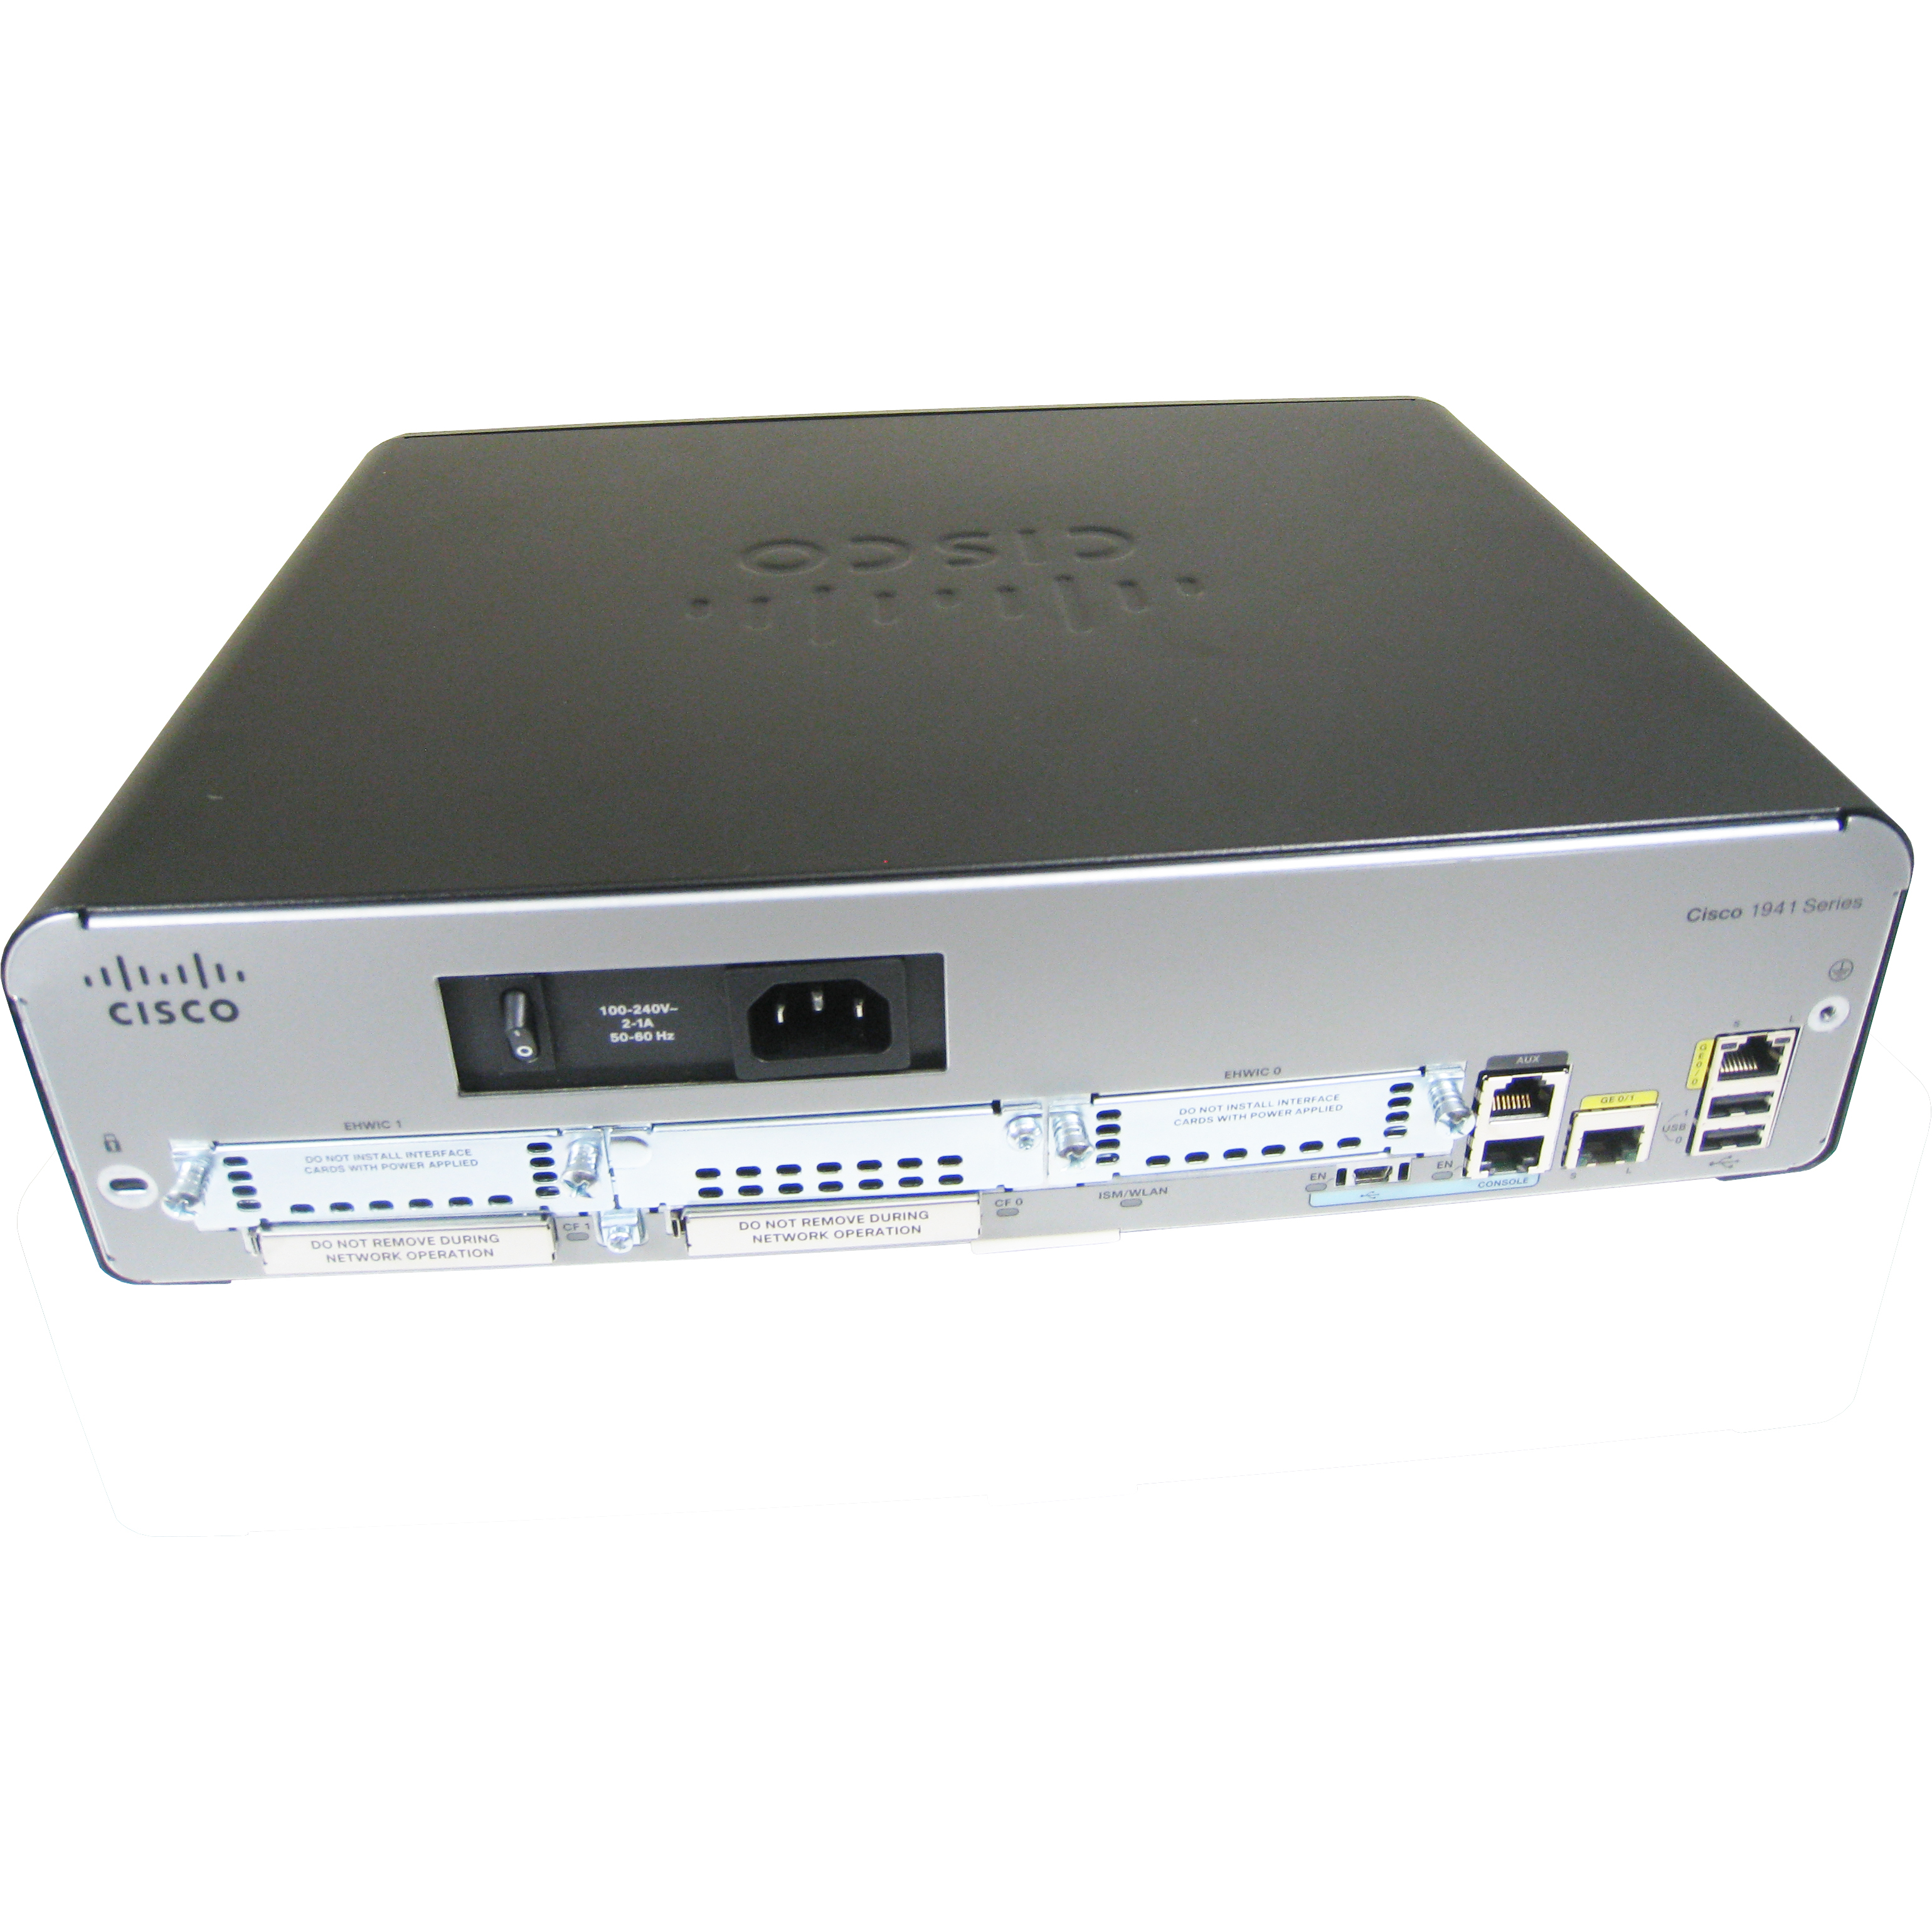 Cisco CISCO1941-HSEC+/K9